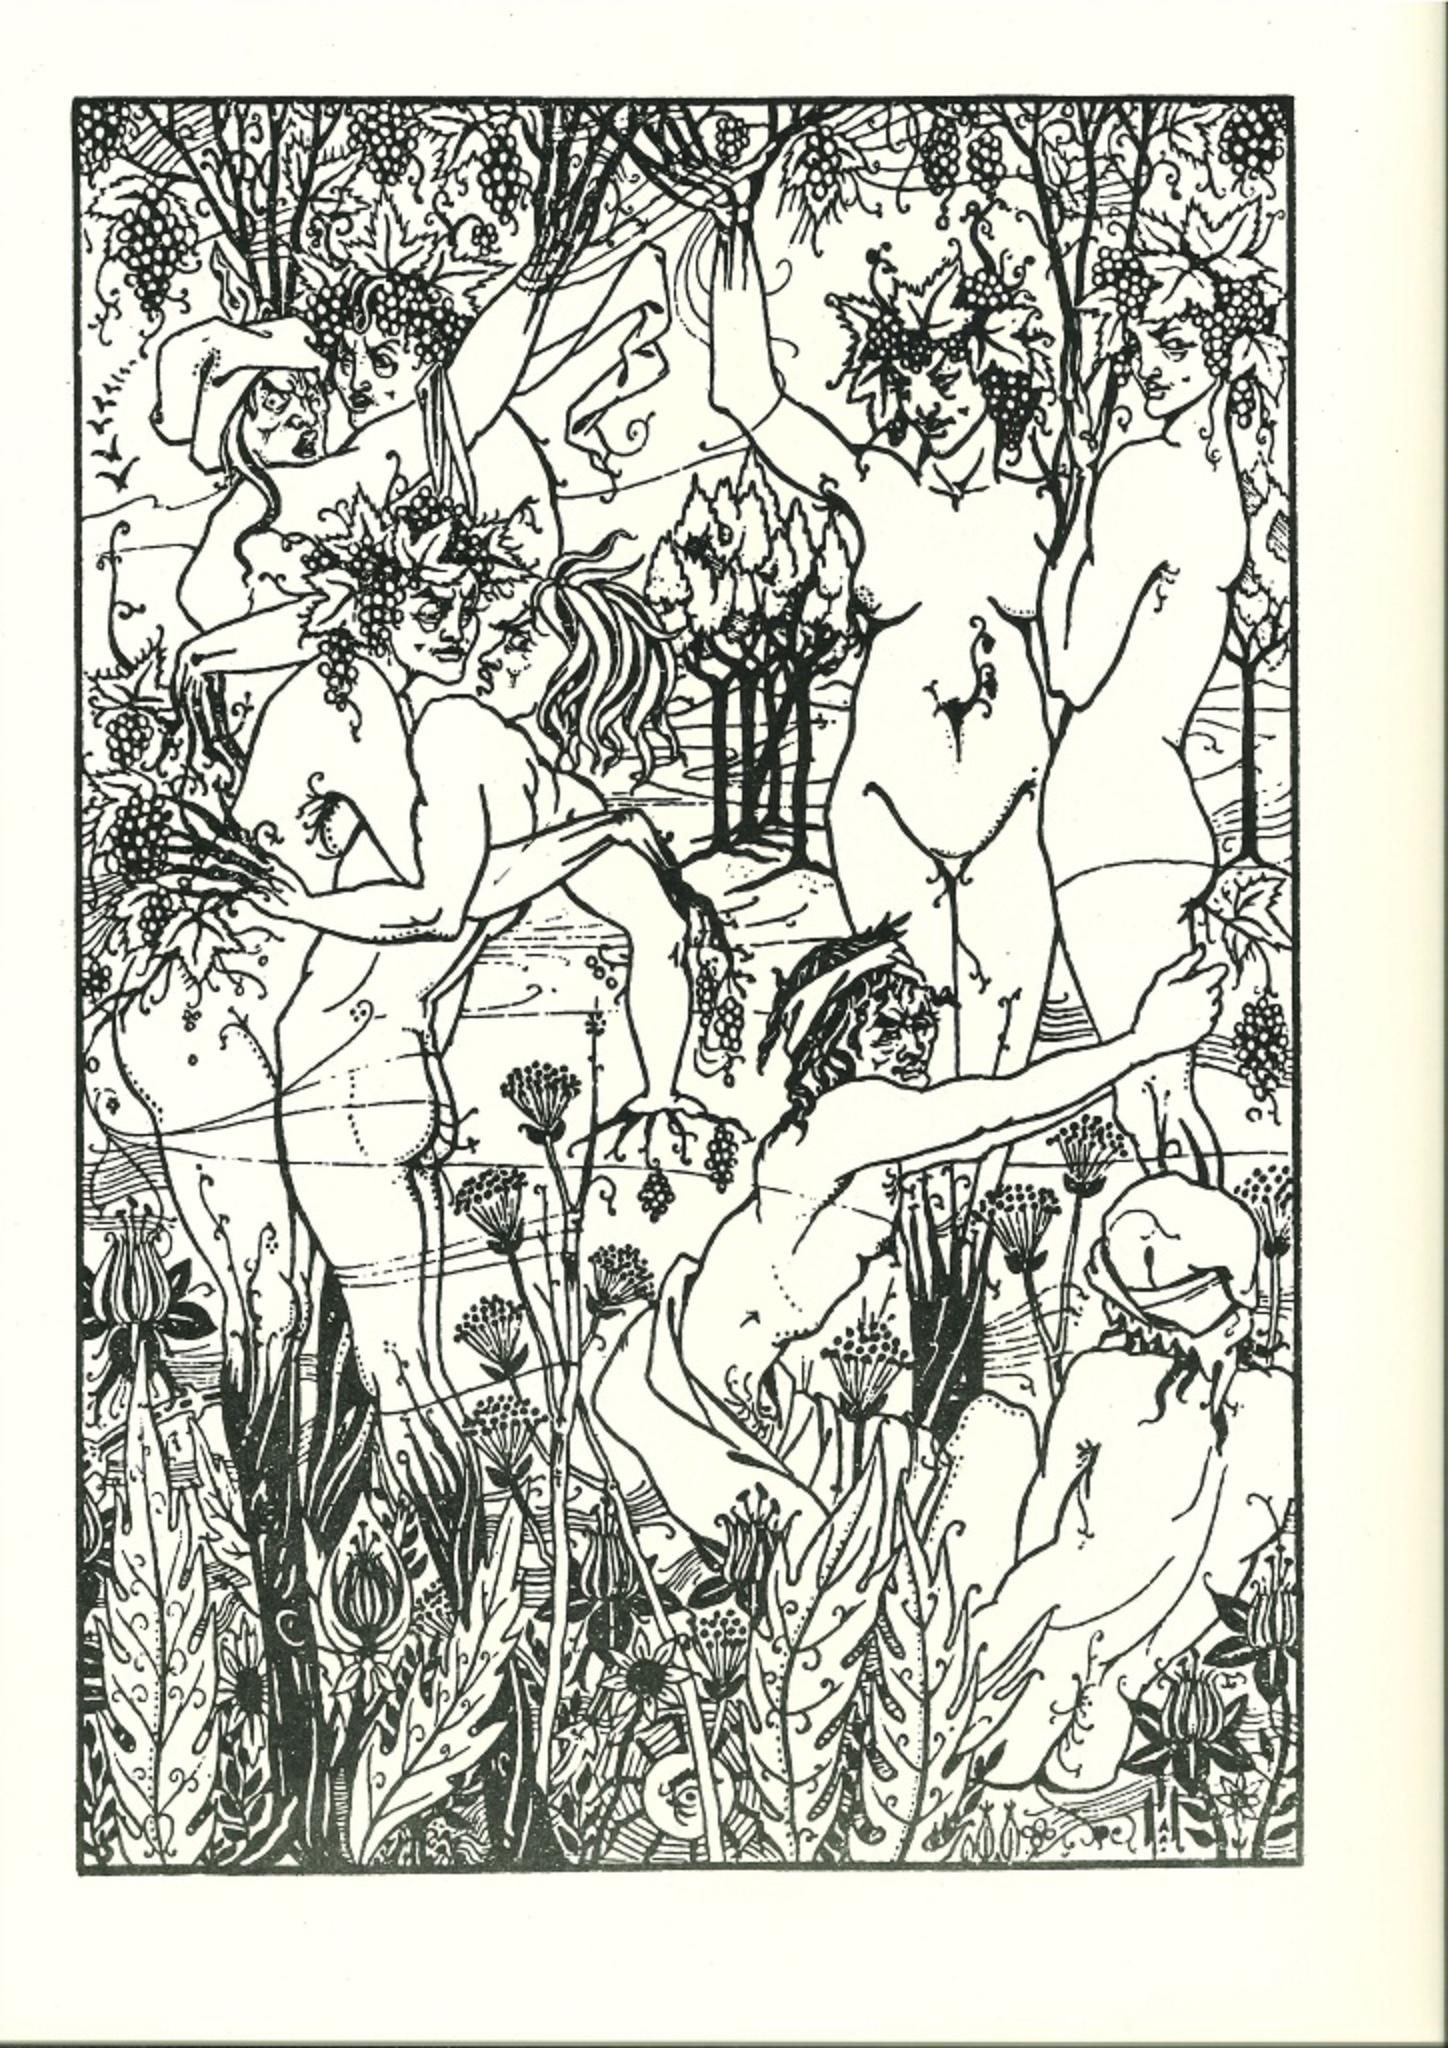 Aubrey Vincent Beardsley Figurative Print - L'Orgie - Original Lithograph after Aubrey Beardsley - 1970